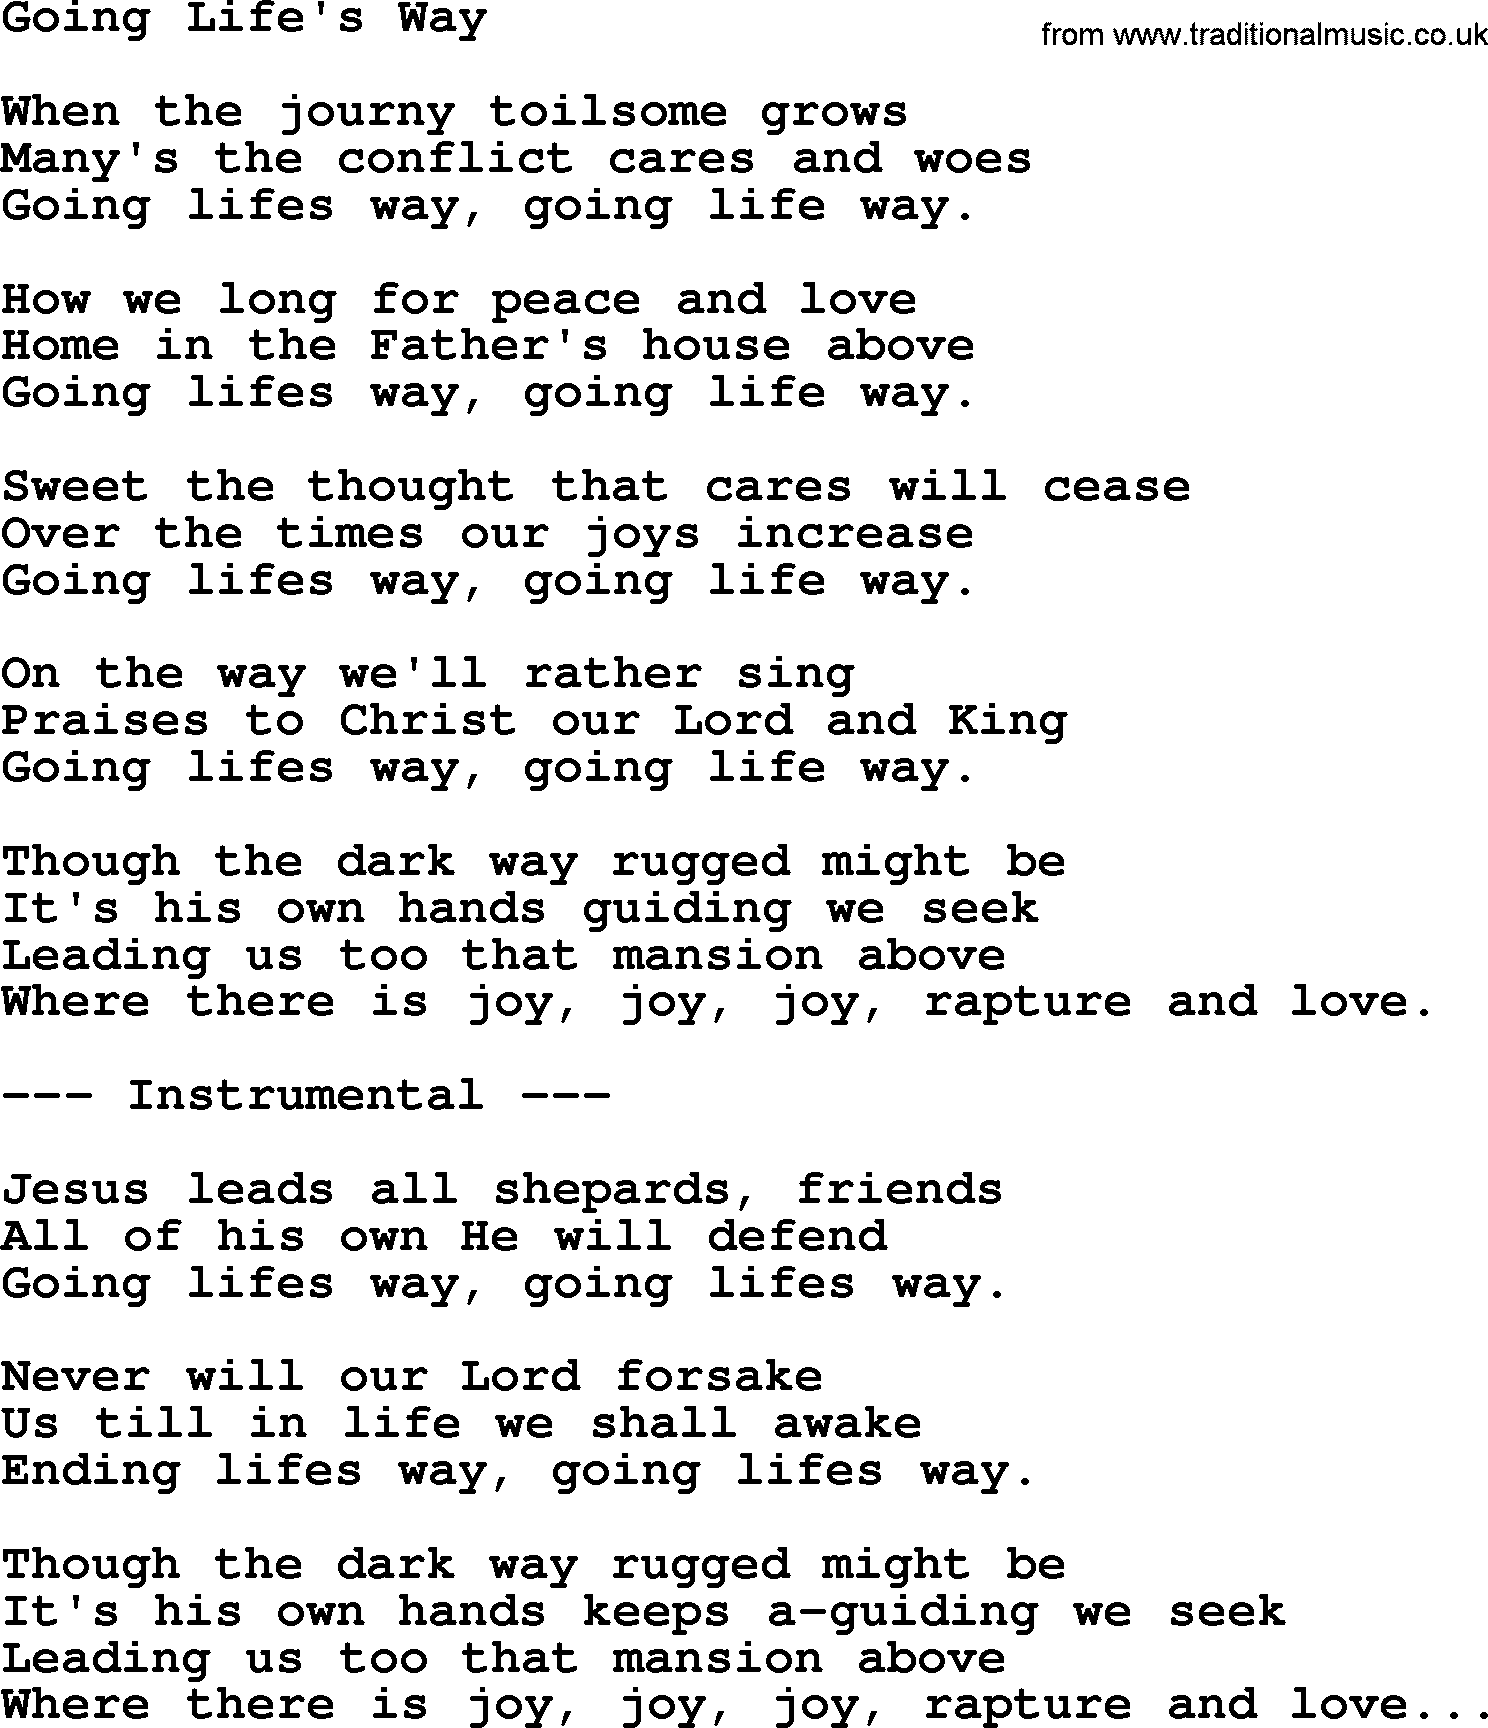 George Jones song: Going Life's Way, lyrics